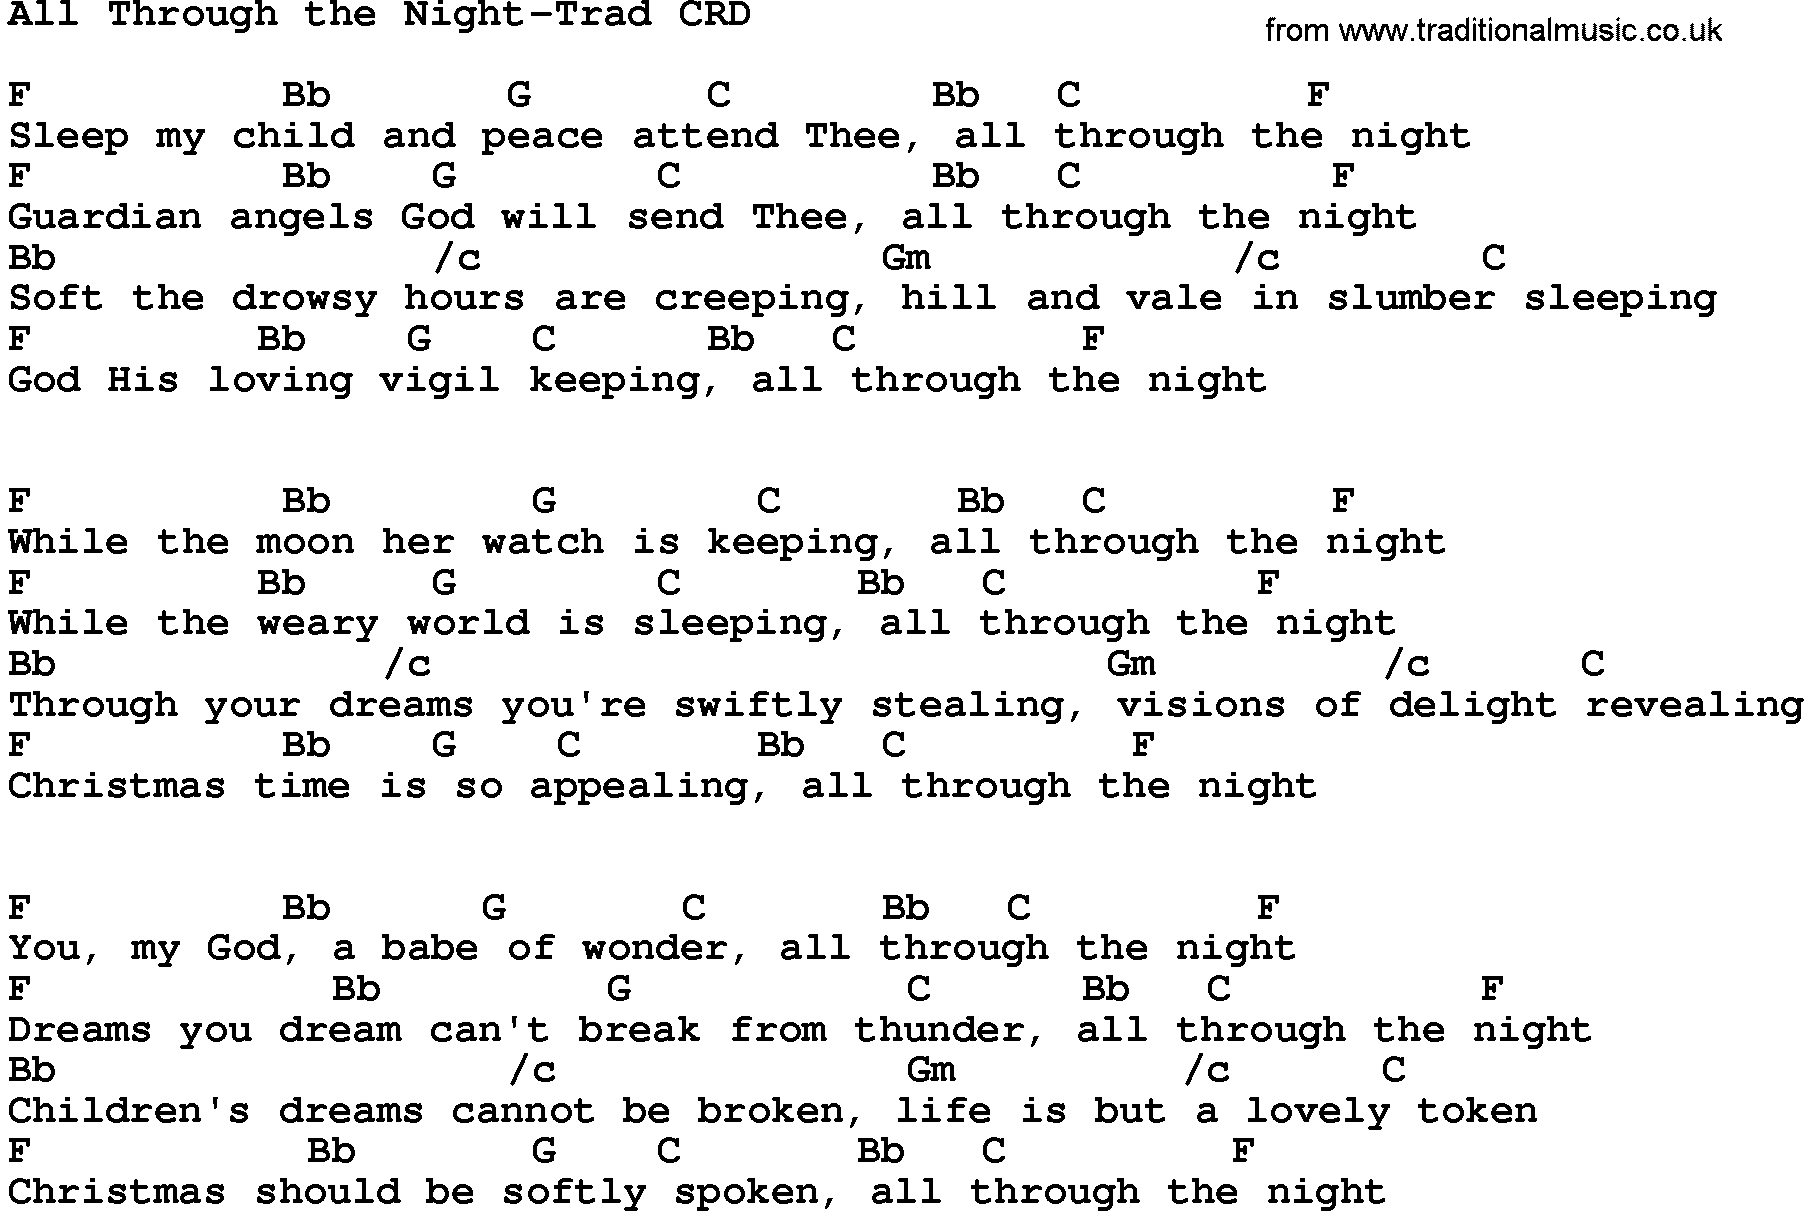 Gospel Song: All Through The Night-Trad, lyrics and chords.